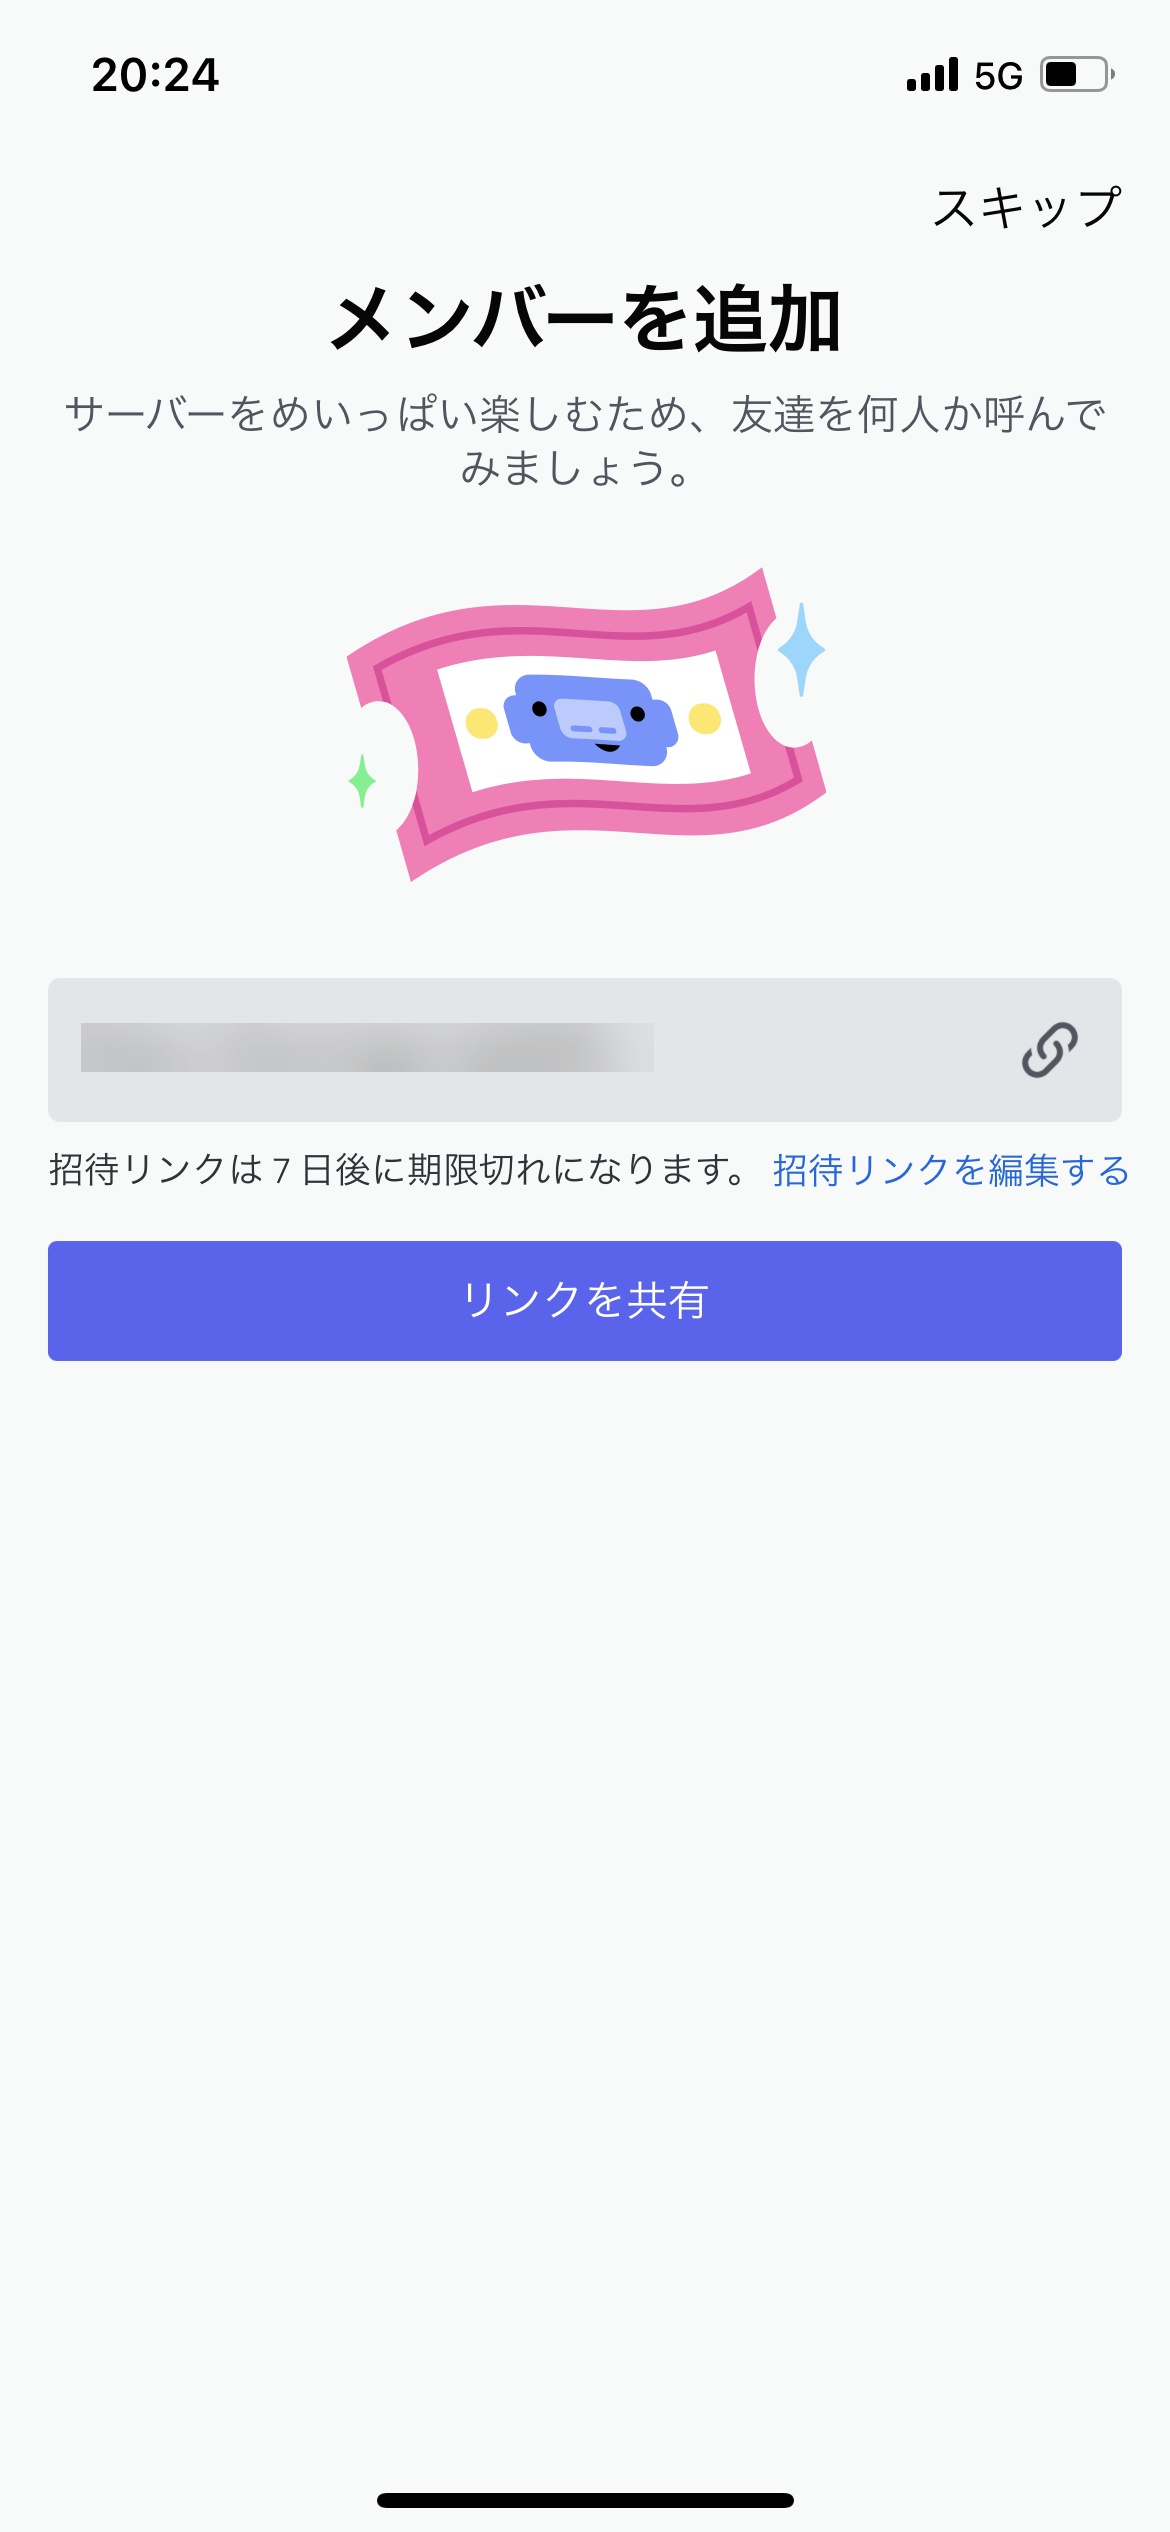 Discord サーバー作成・メッセージ screen